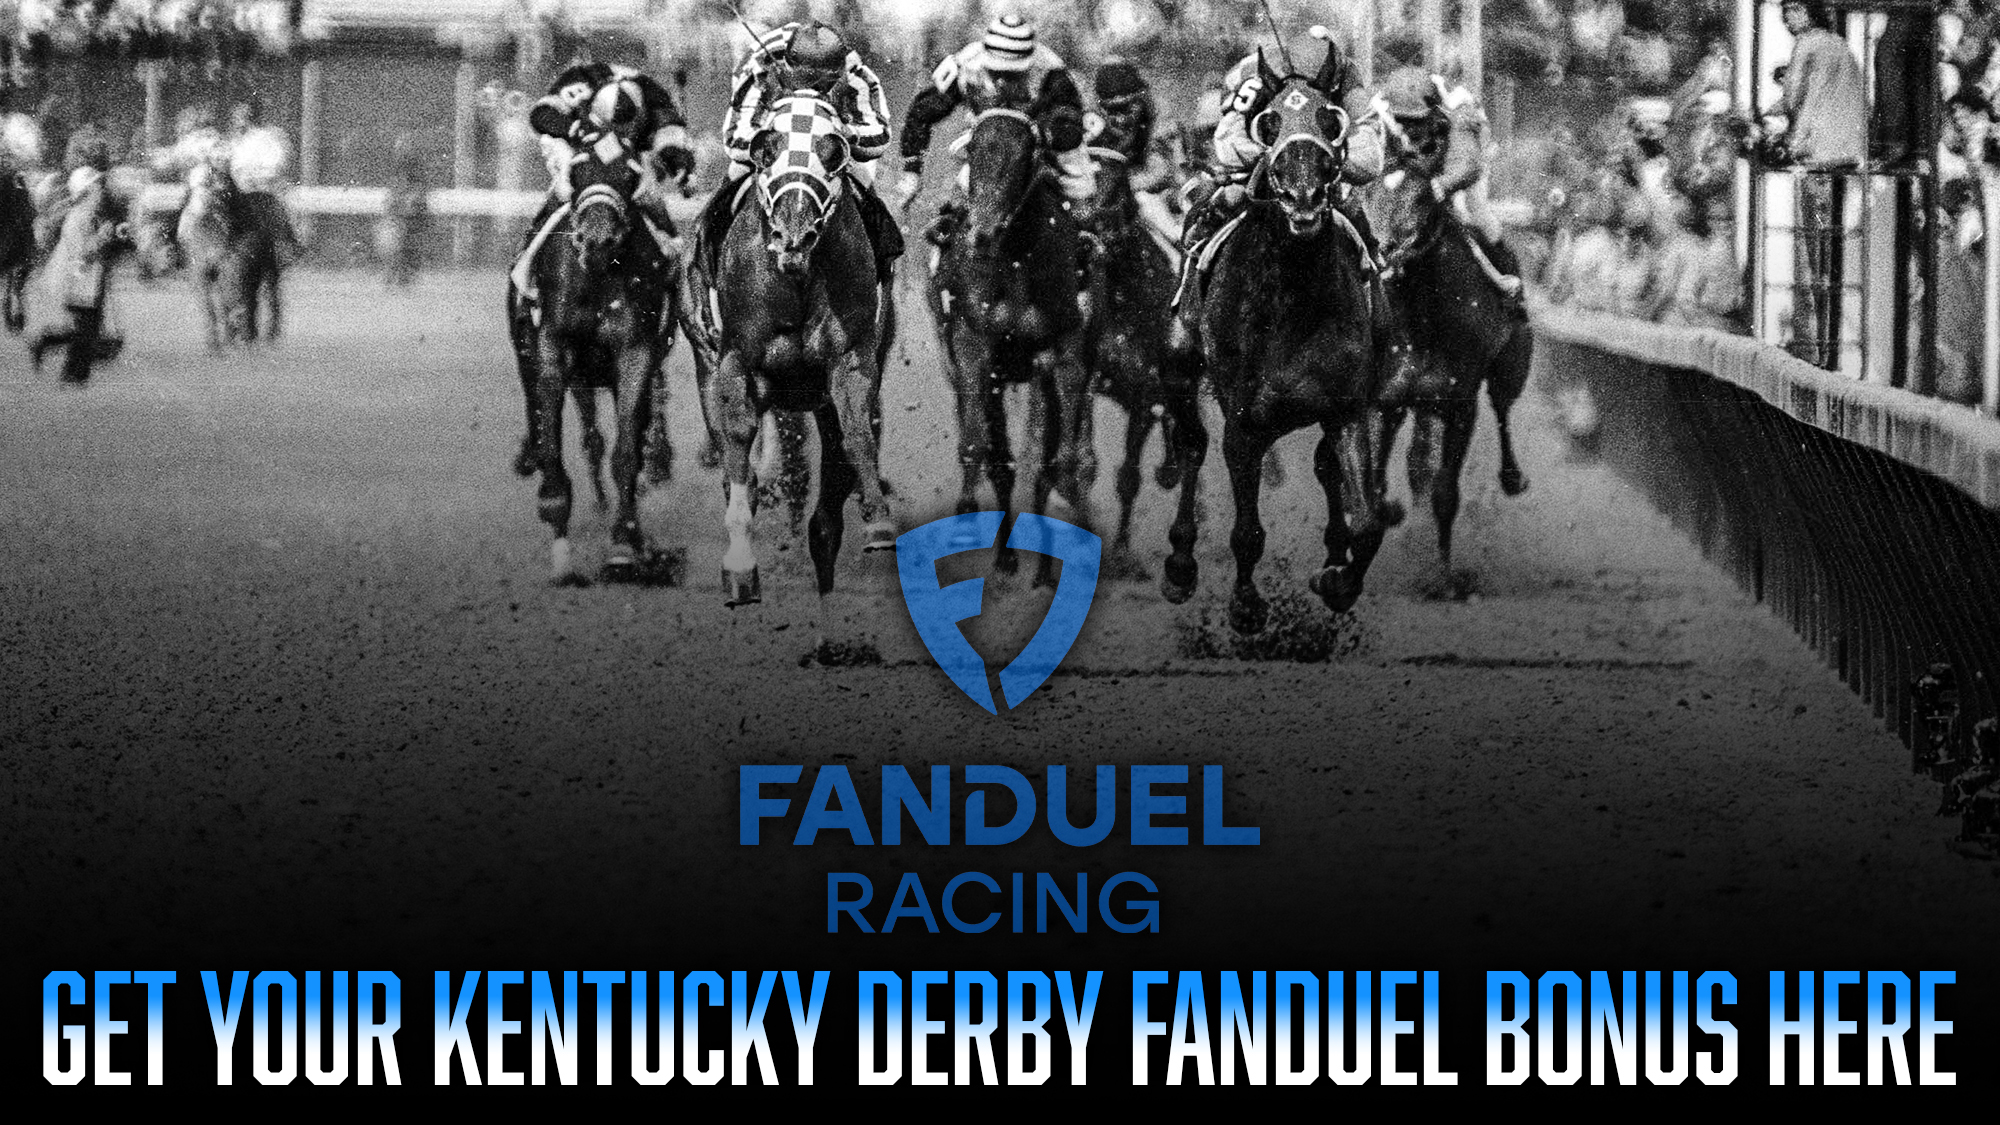 FanDuel Promo Code Get Kentucky Derby Bonus Horse Racing NY Times